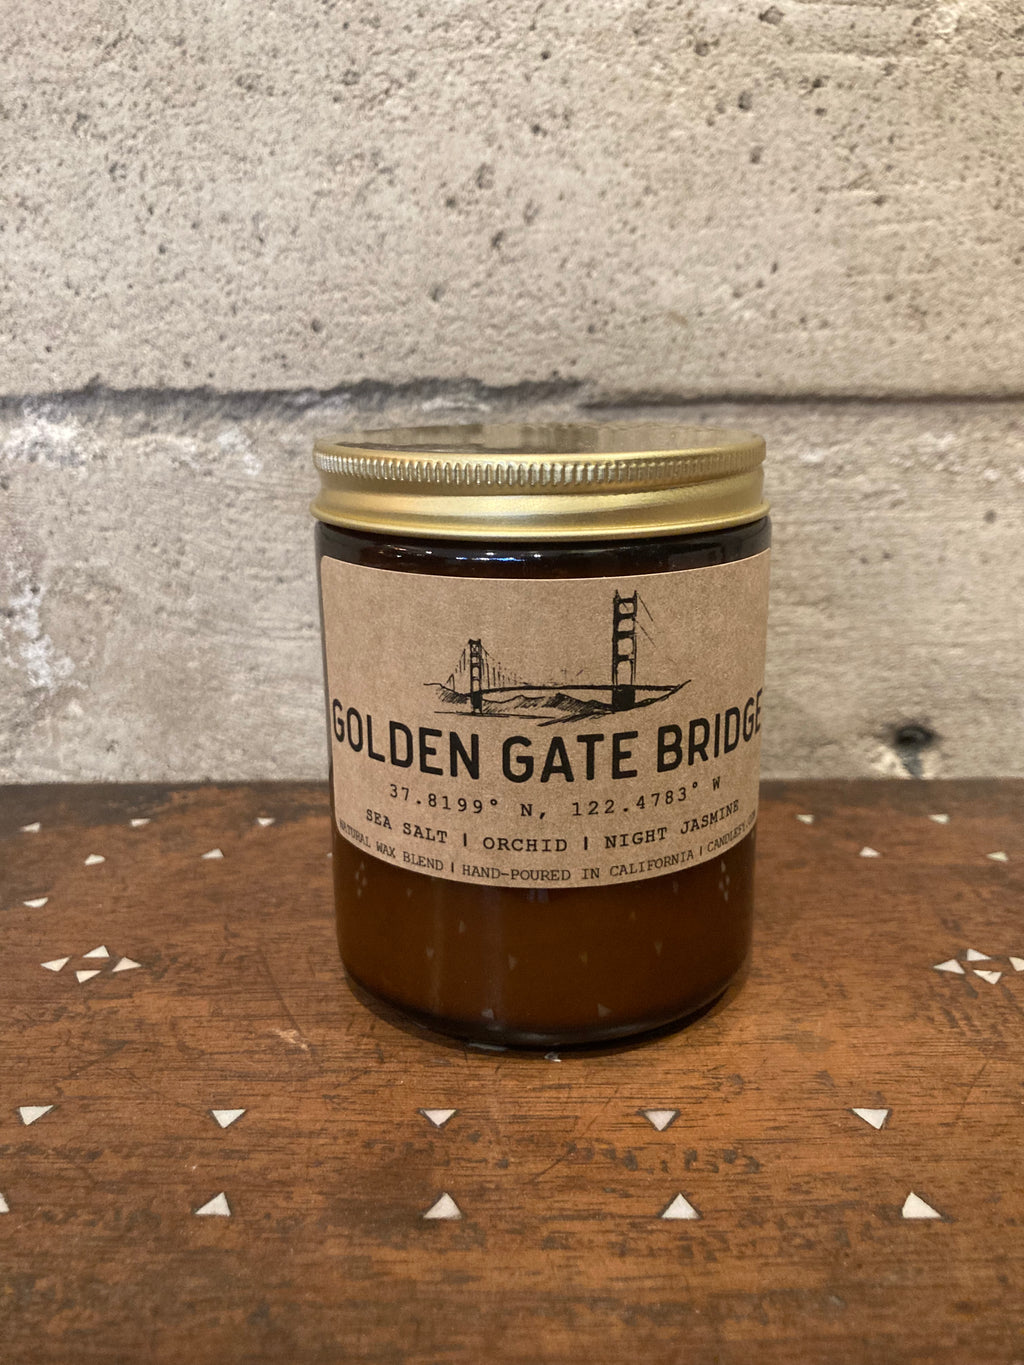 GOLDEN GATE BRIDGE CANDLE - 9 oz